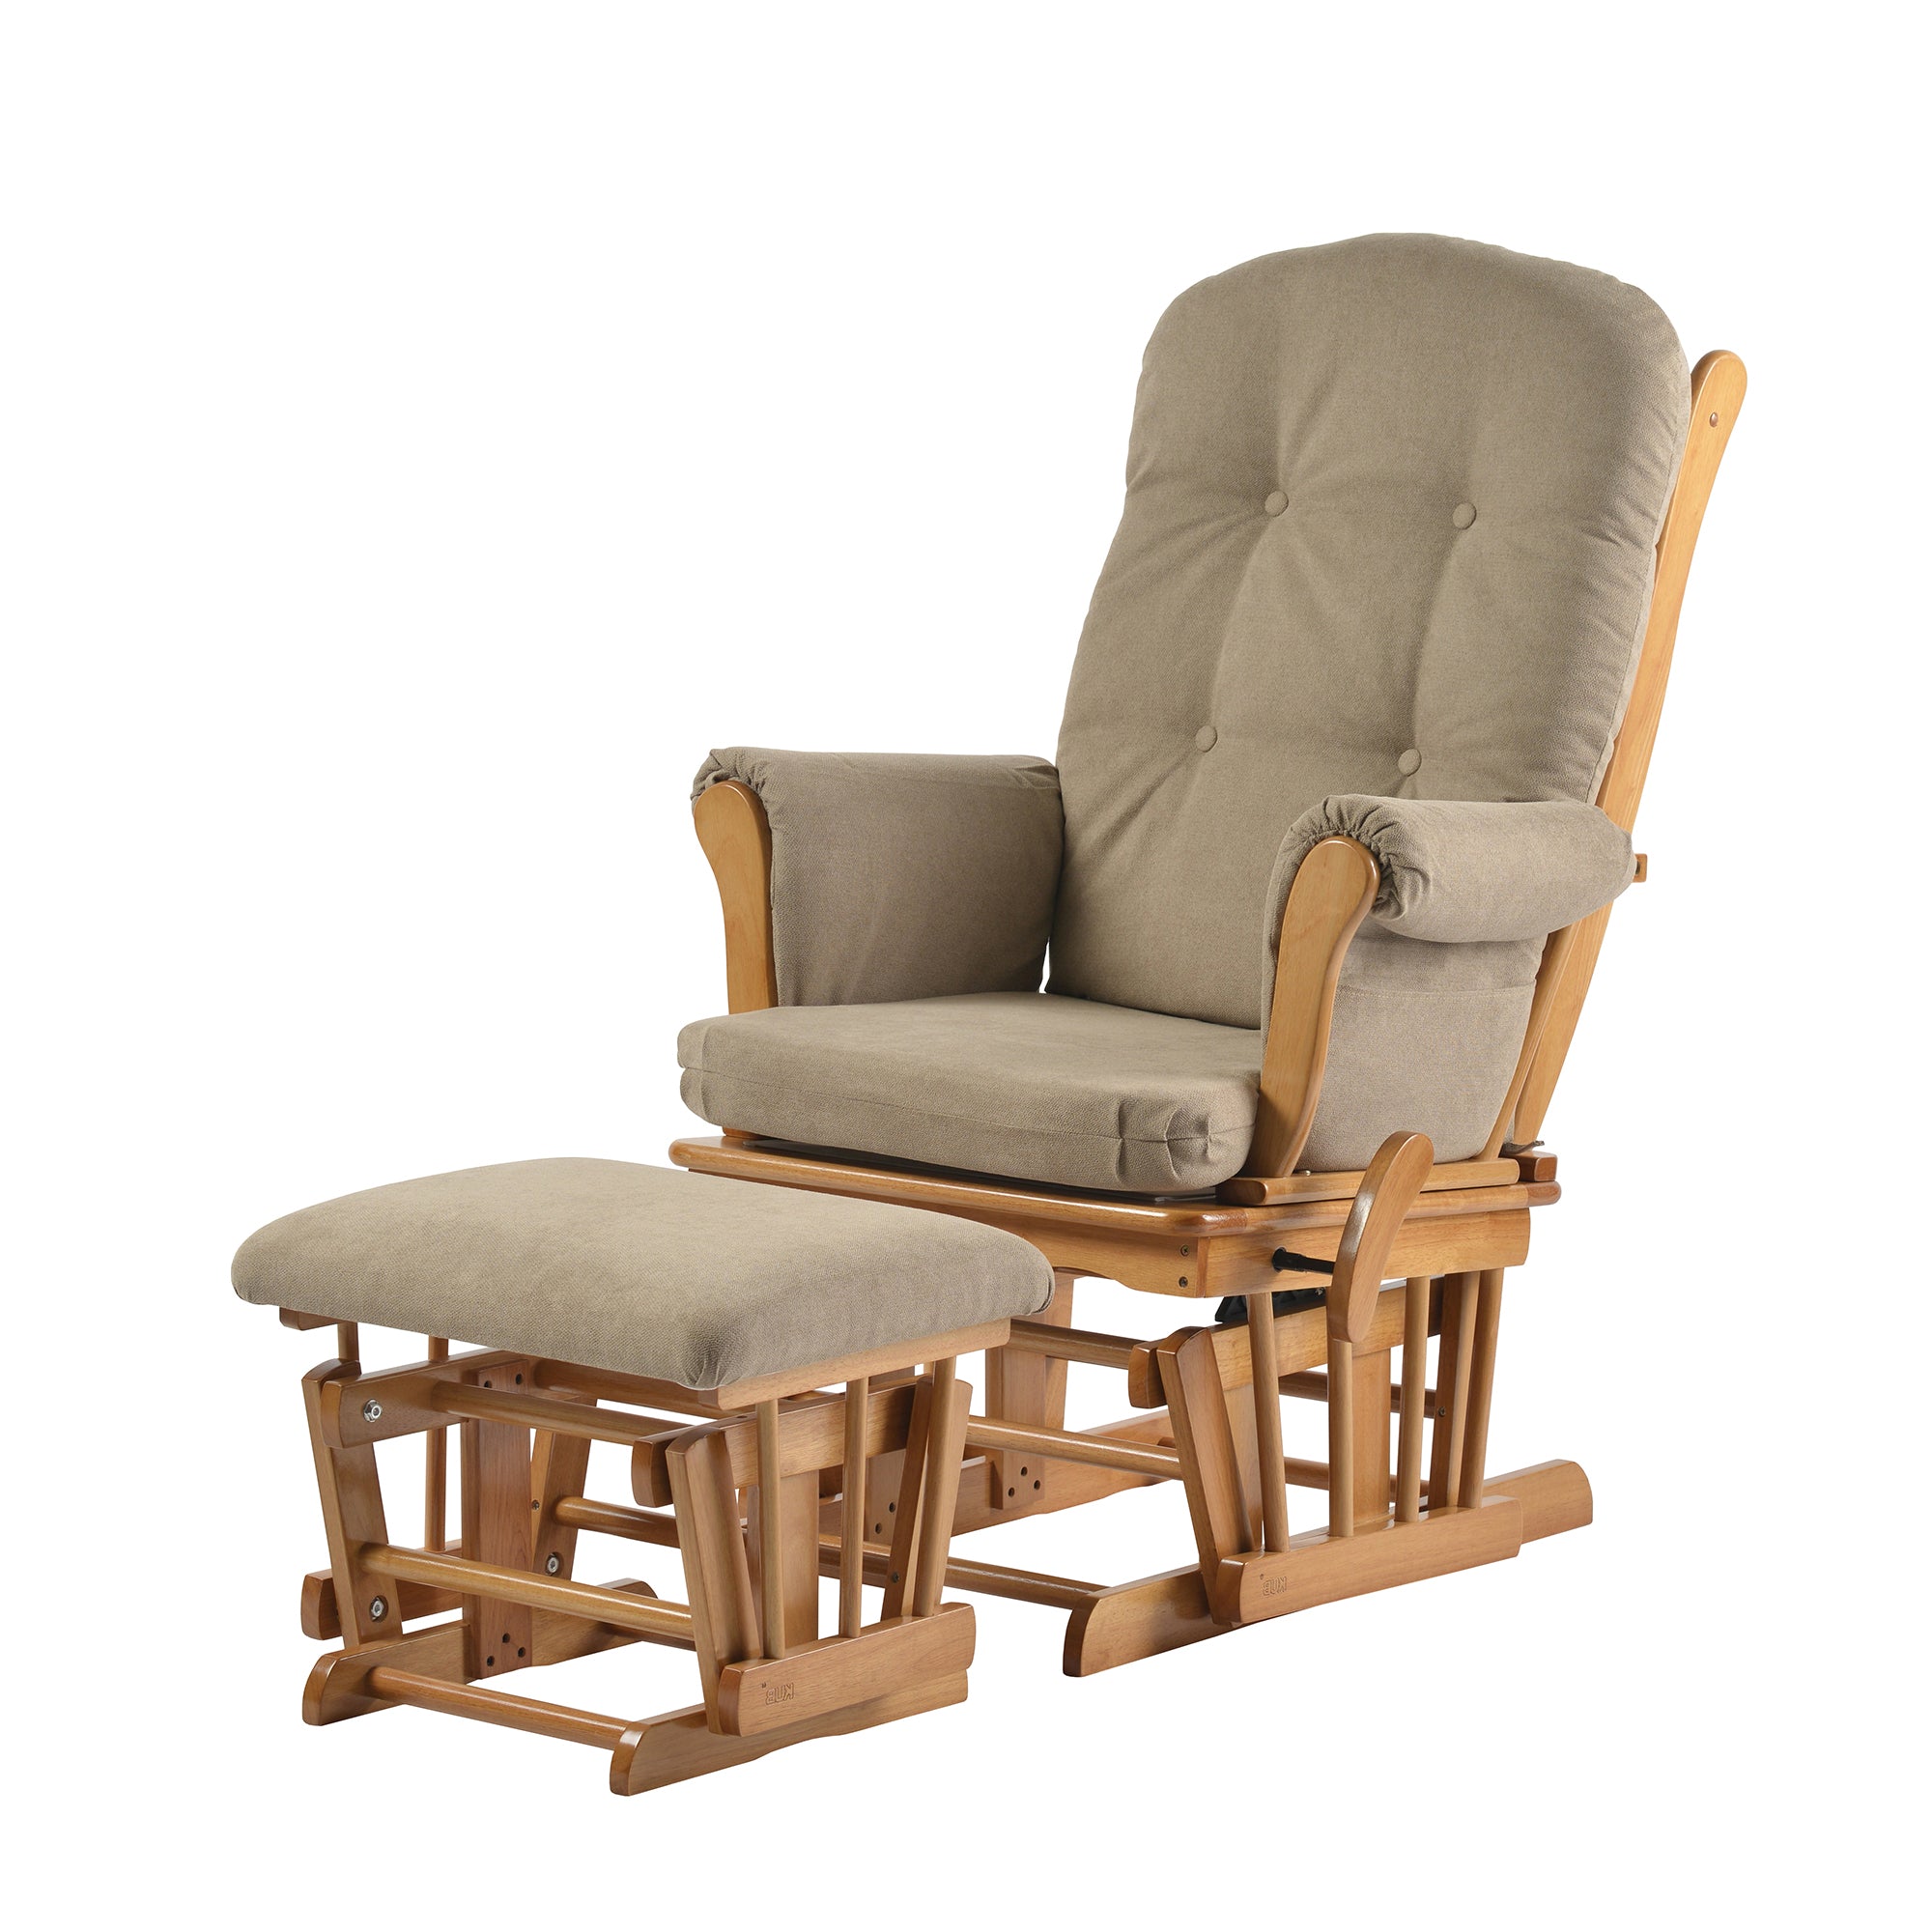 Kielder Nursing Chair and Footstool - 40% OFF